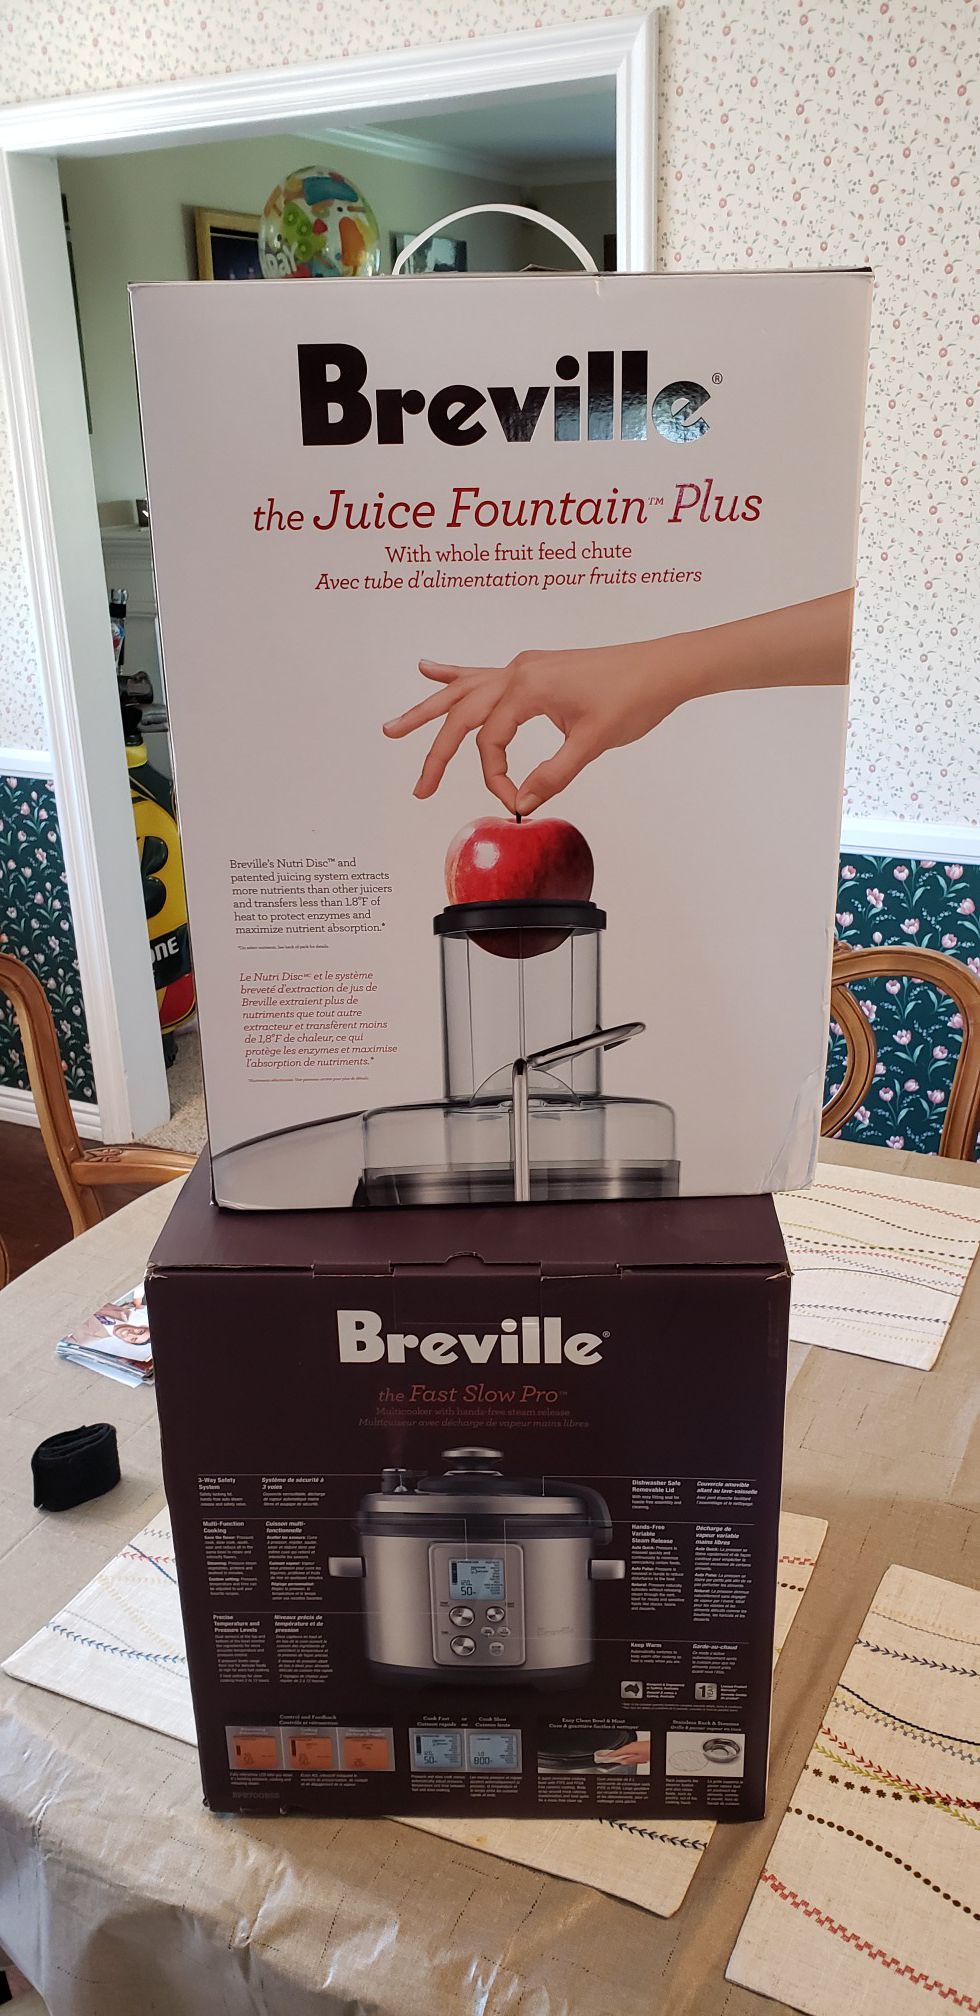 Breville kitchen appliances